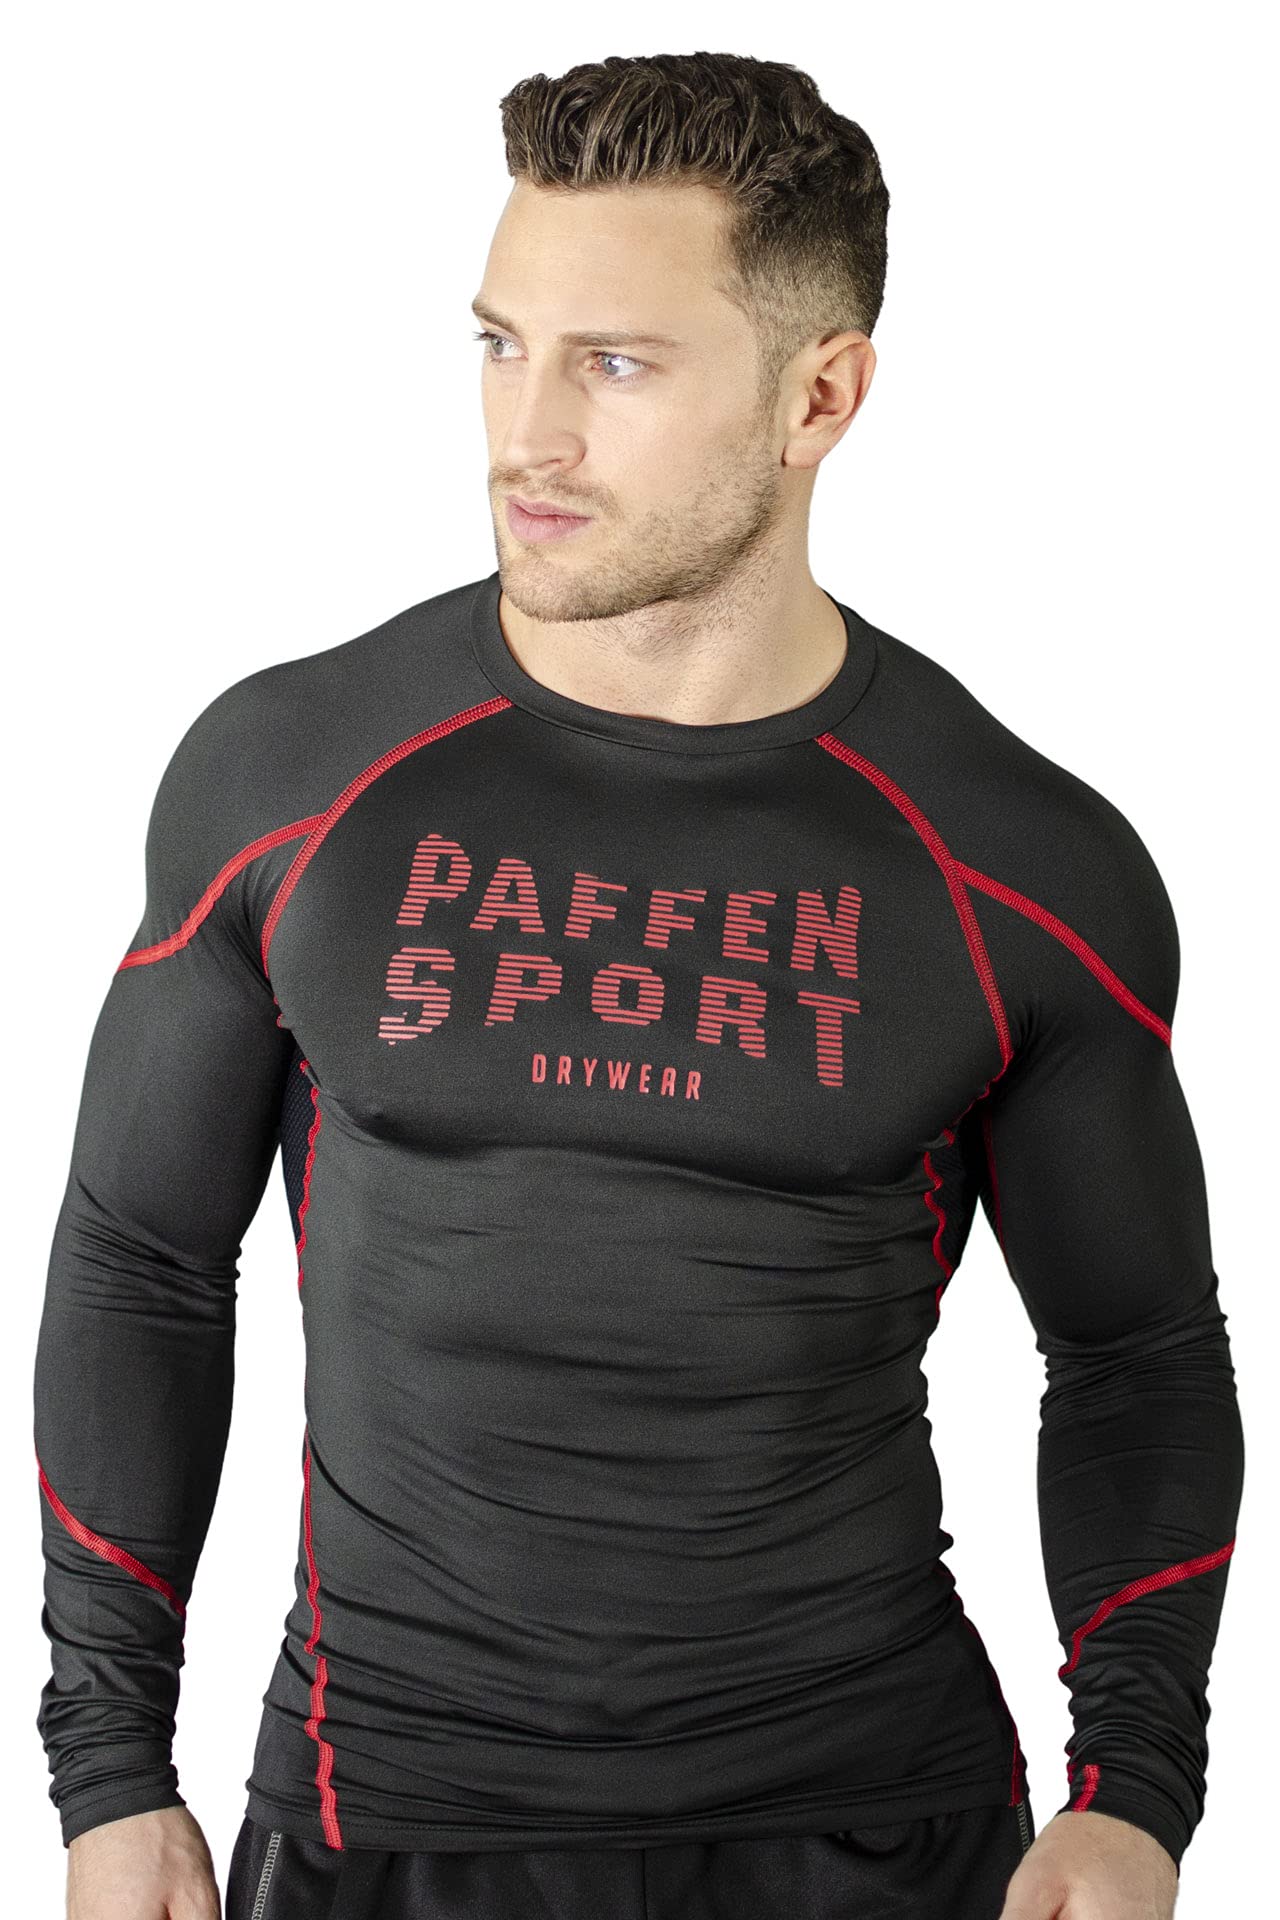 PAFFEN SPORT PRO Performance Compressed Long Sleeve Langarm-Shirt – Größe: XL